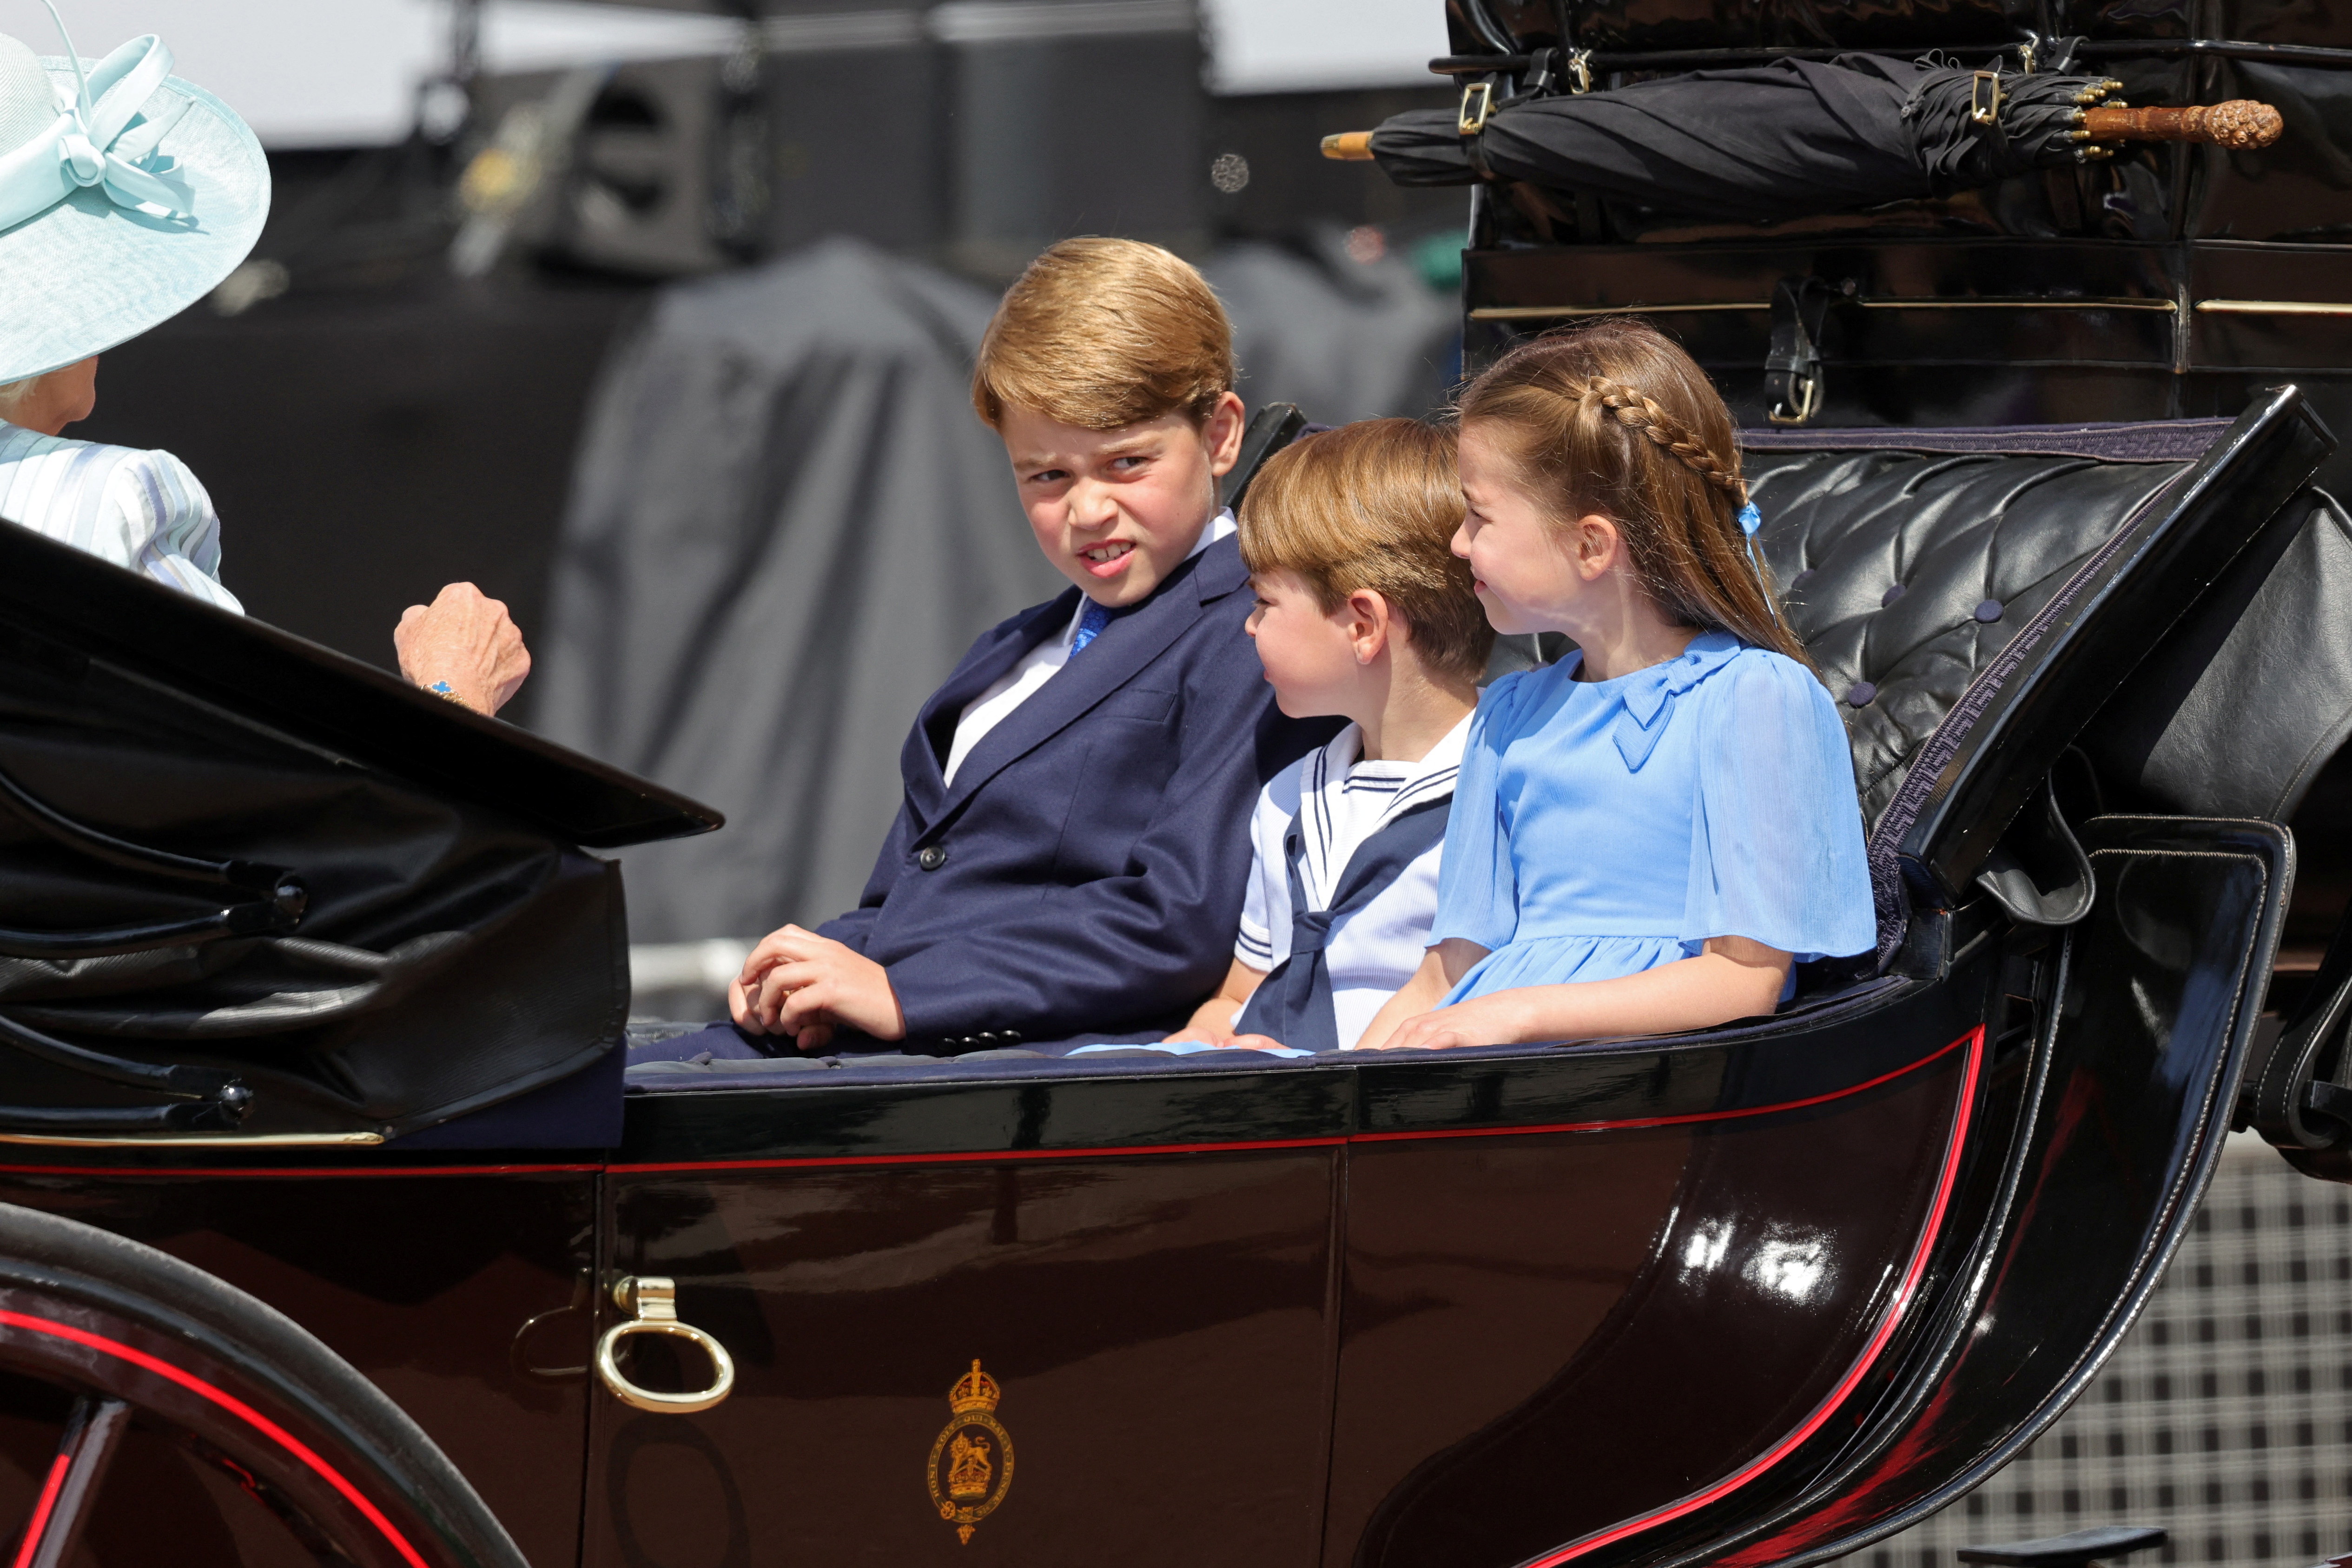 I principi George e Louis e la principessa Charlotte.  Chris Jackson/Piscina via REUTERS